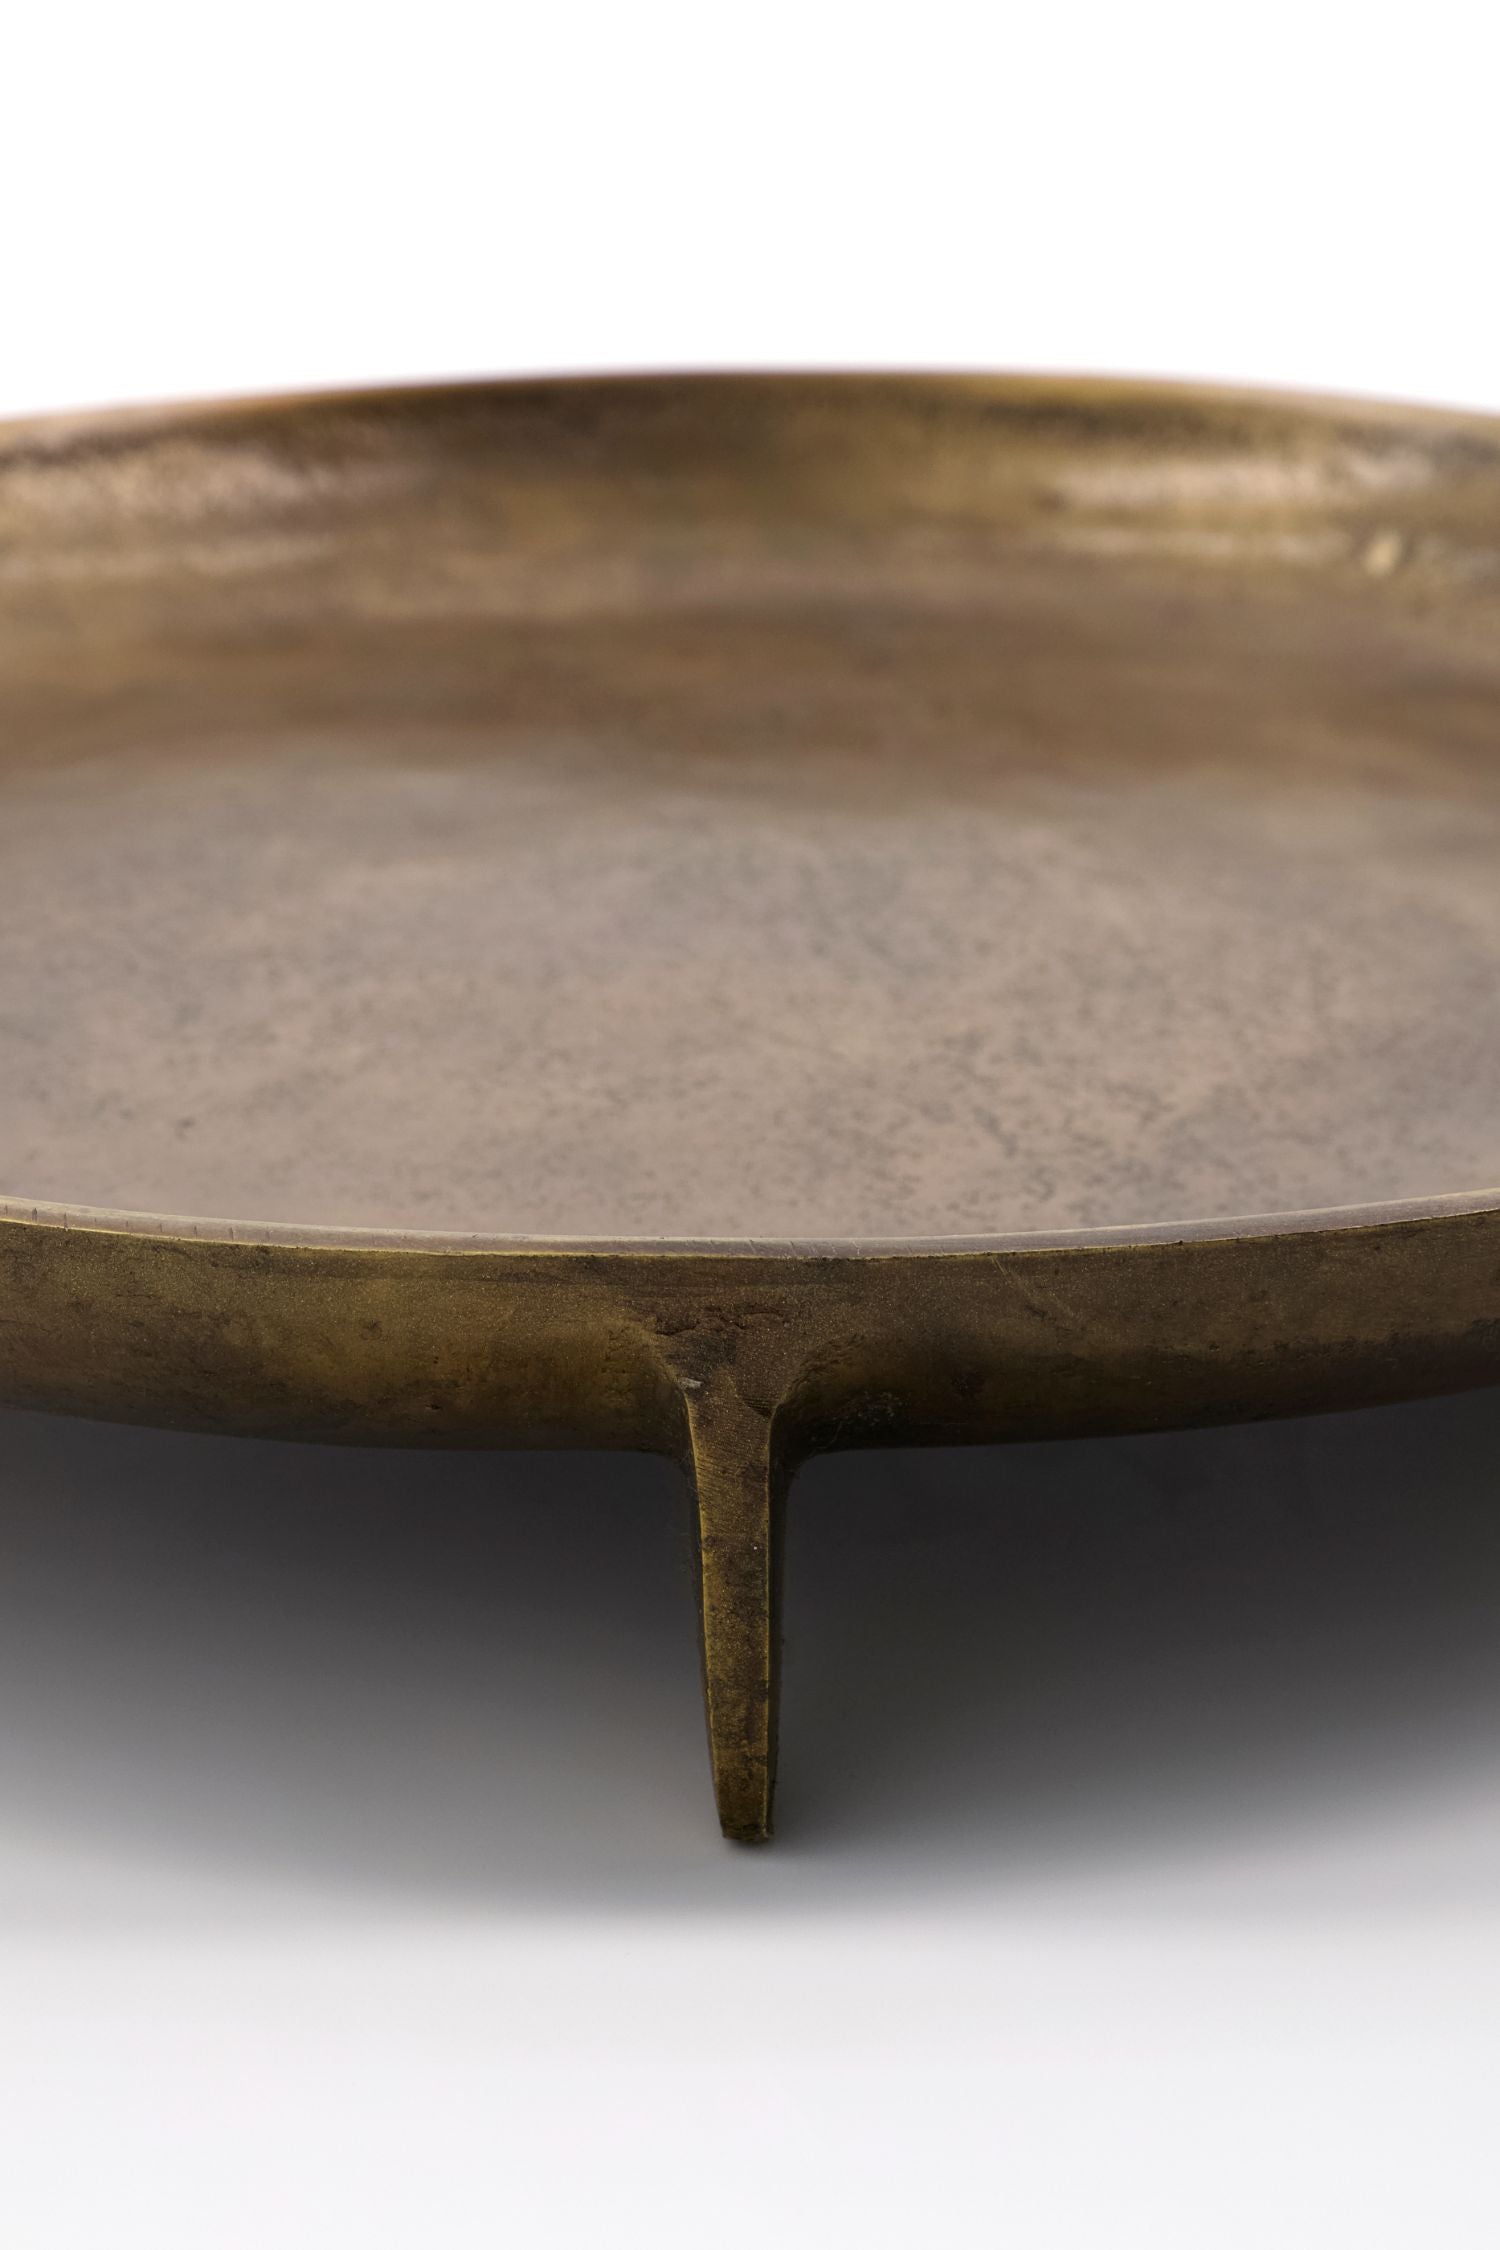 cast tray antique brass